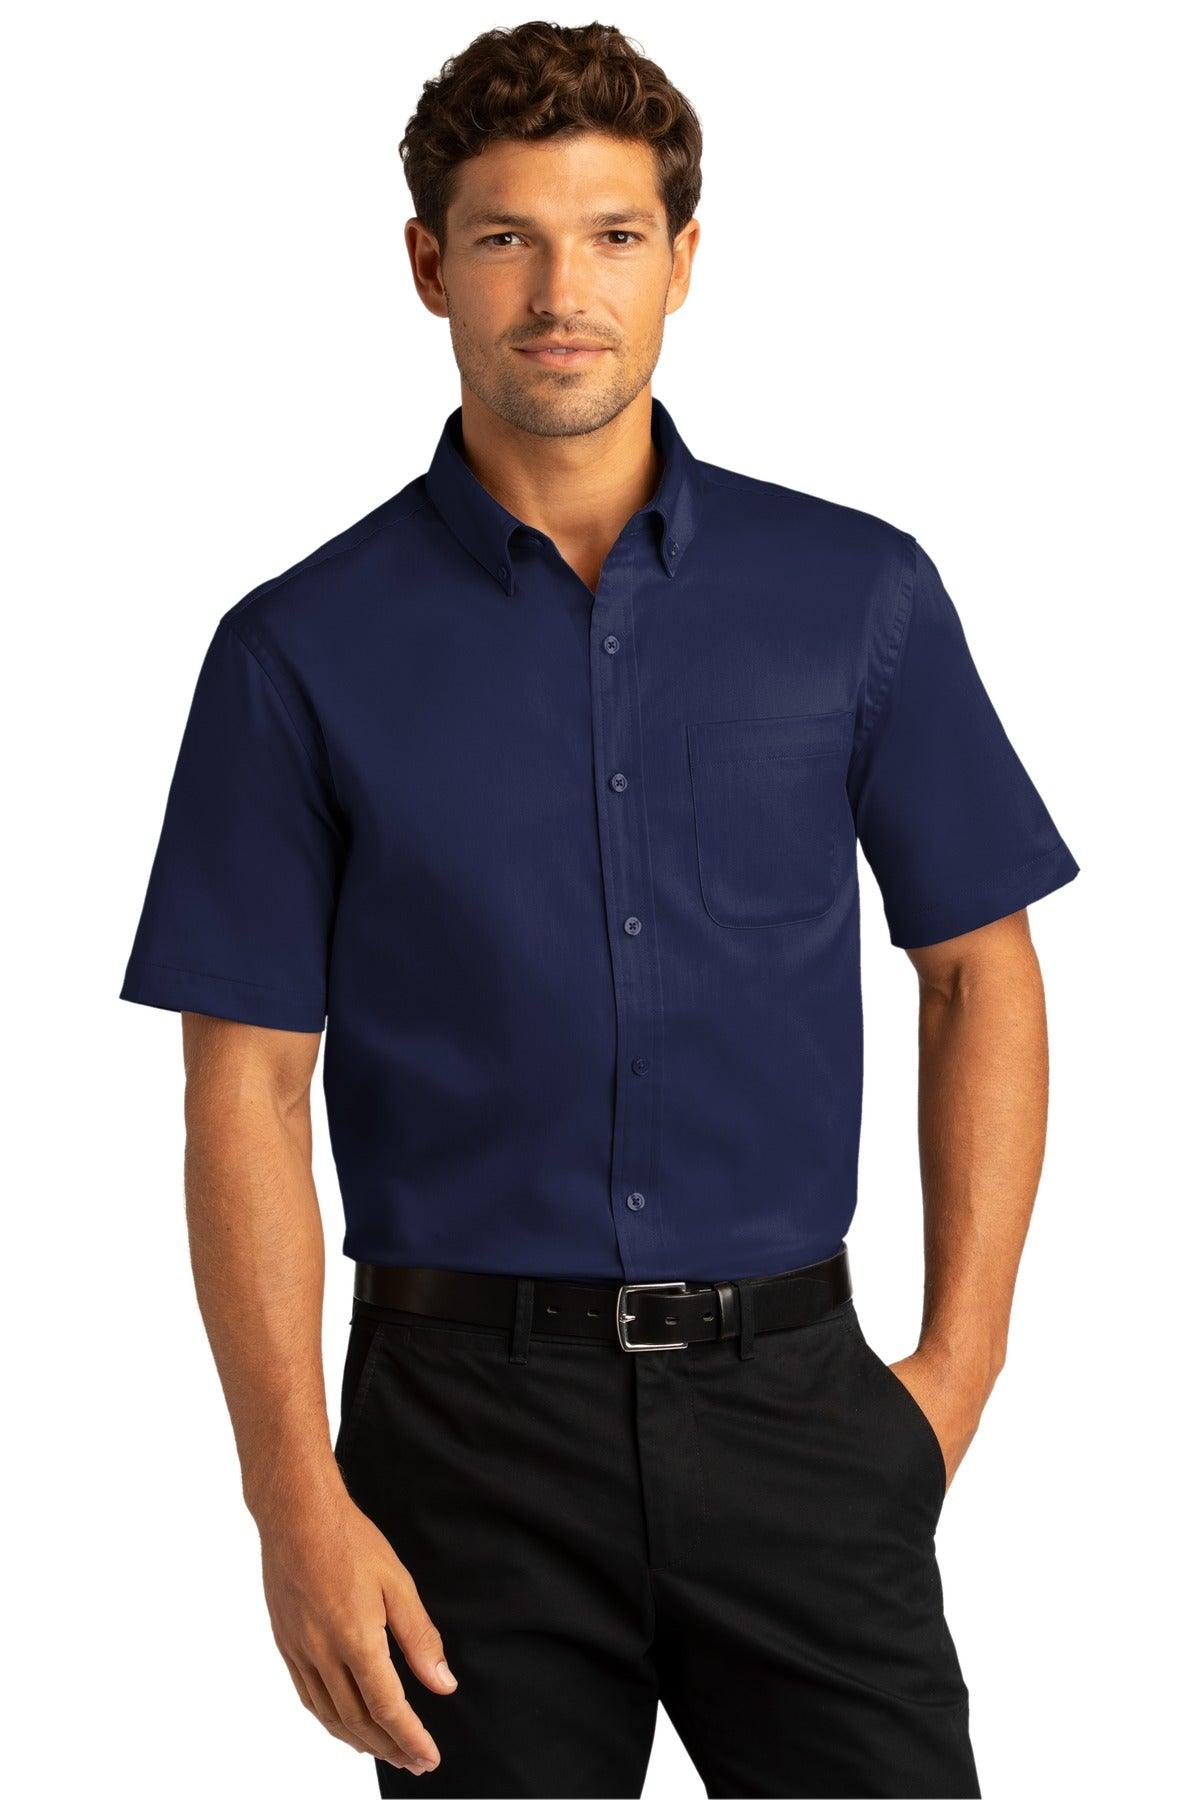 Port Authority Short Sleeve SuperPro React Twill Shirt. W809 - Dresses Max